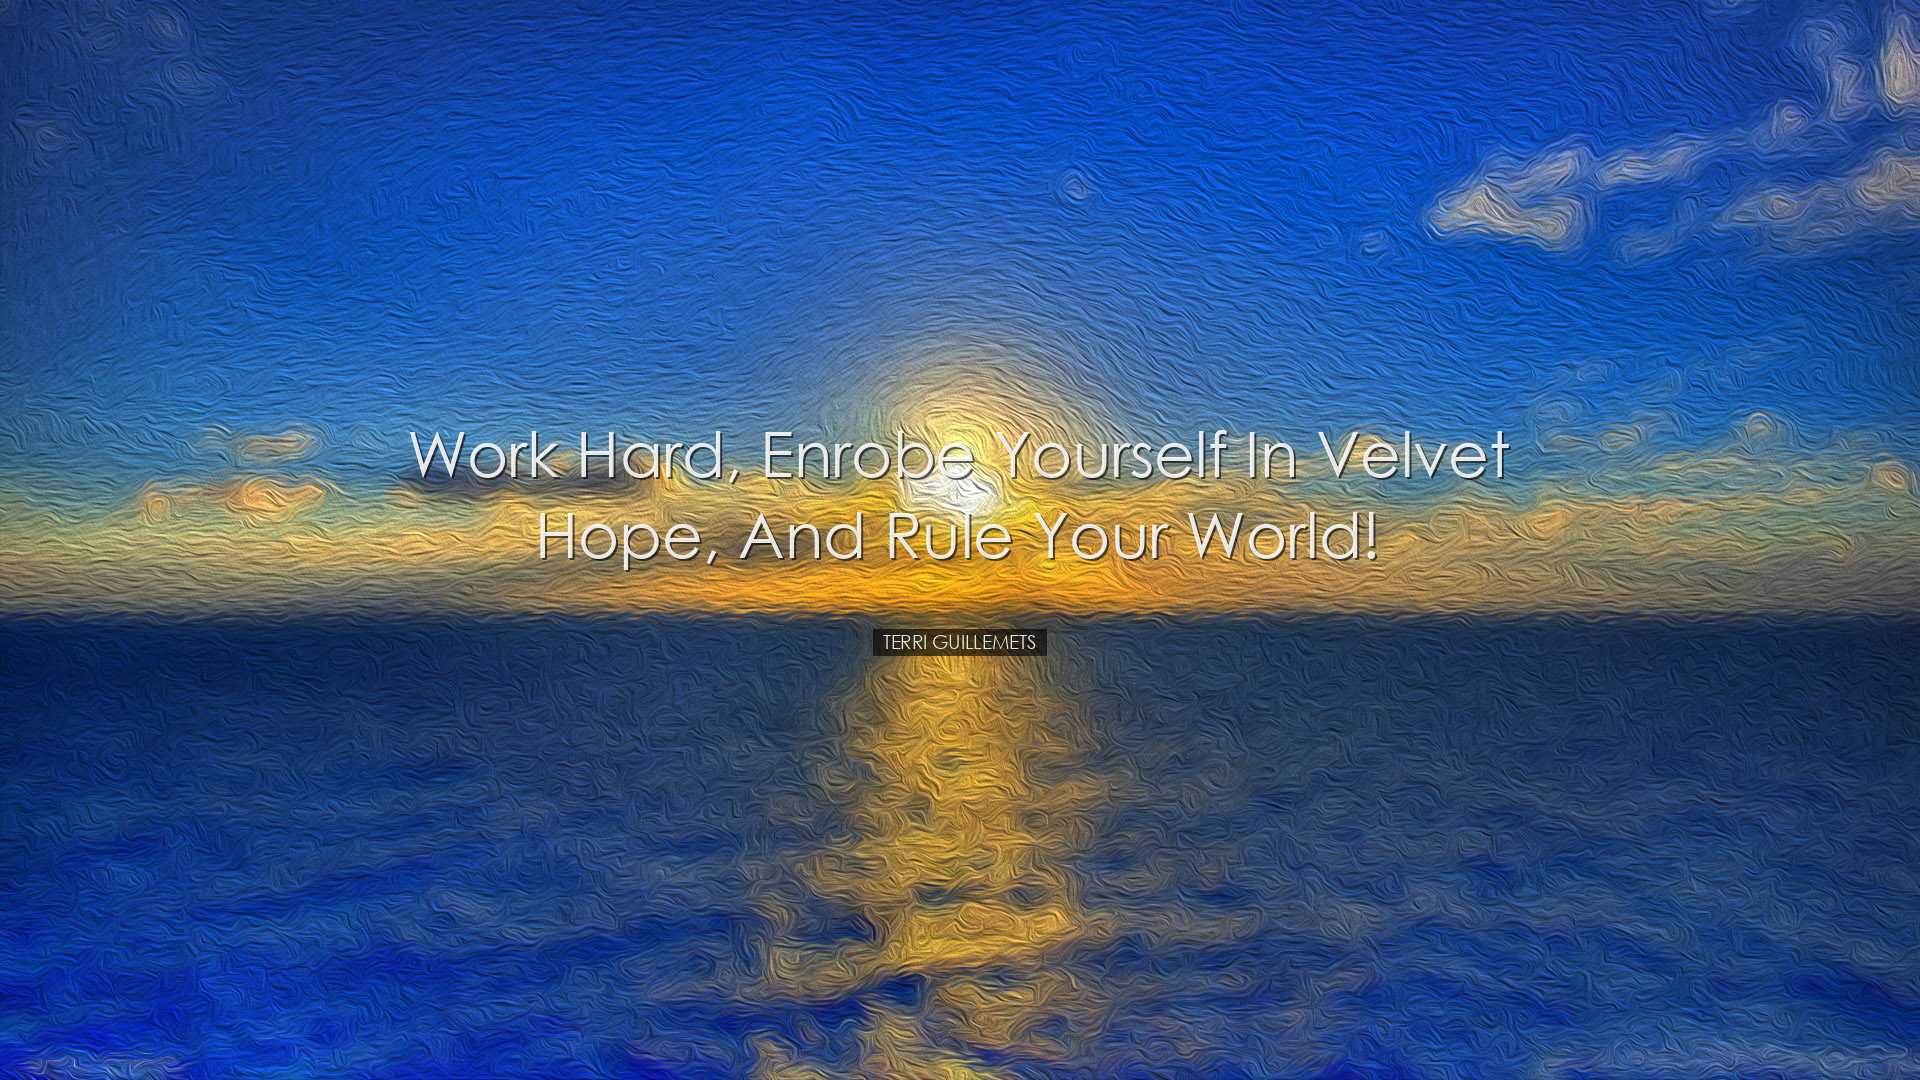 Work hard, enrobe yourself in velvet hope, and rule your world! -